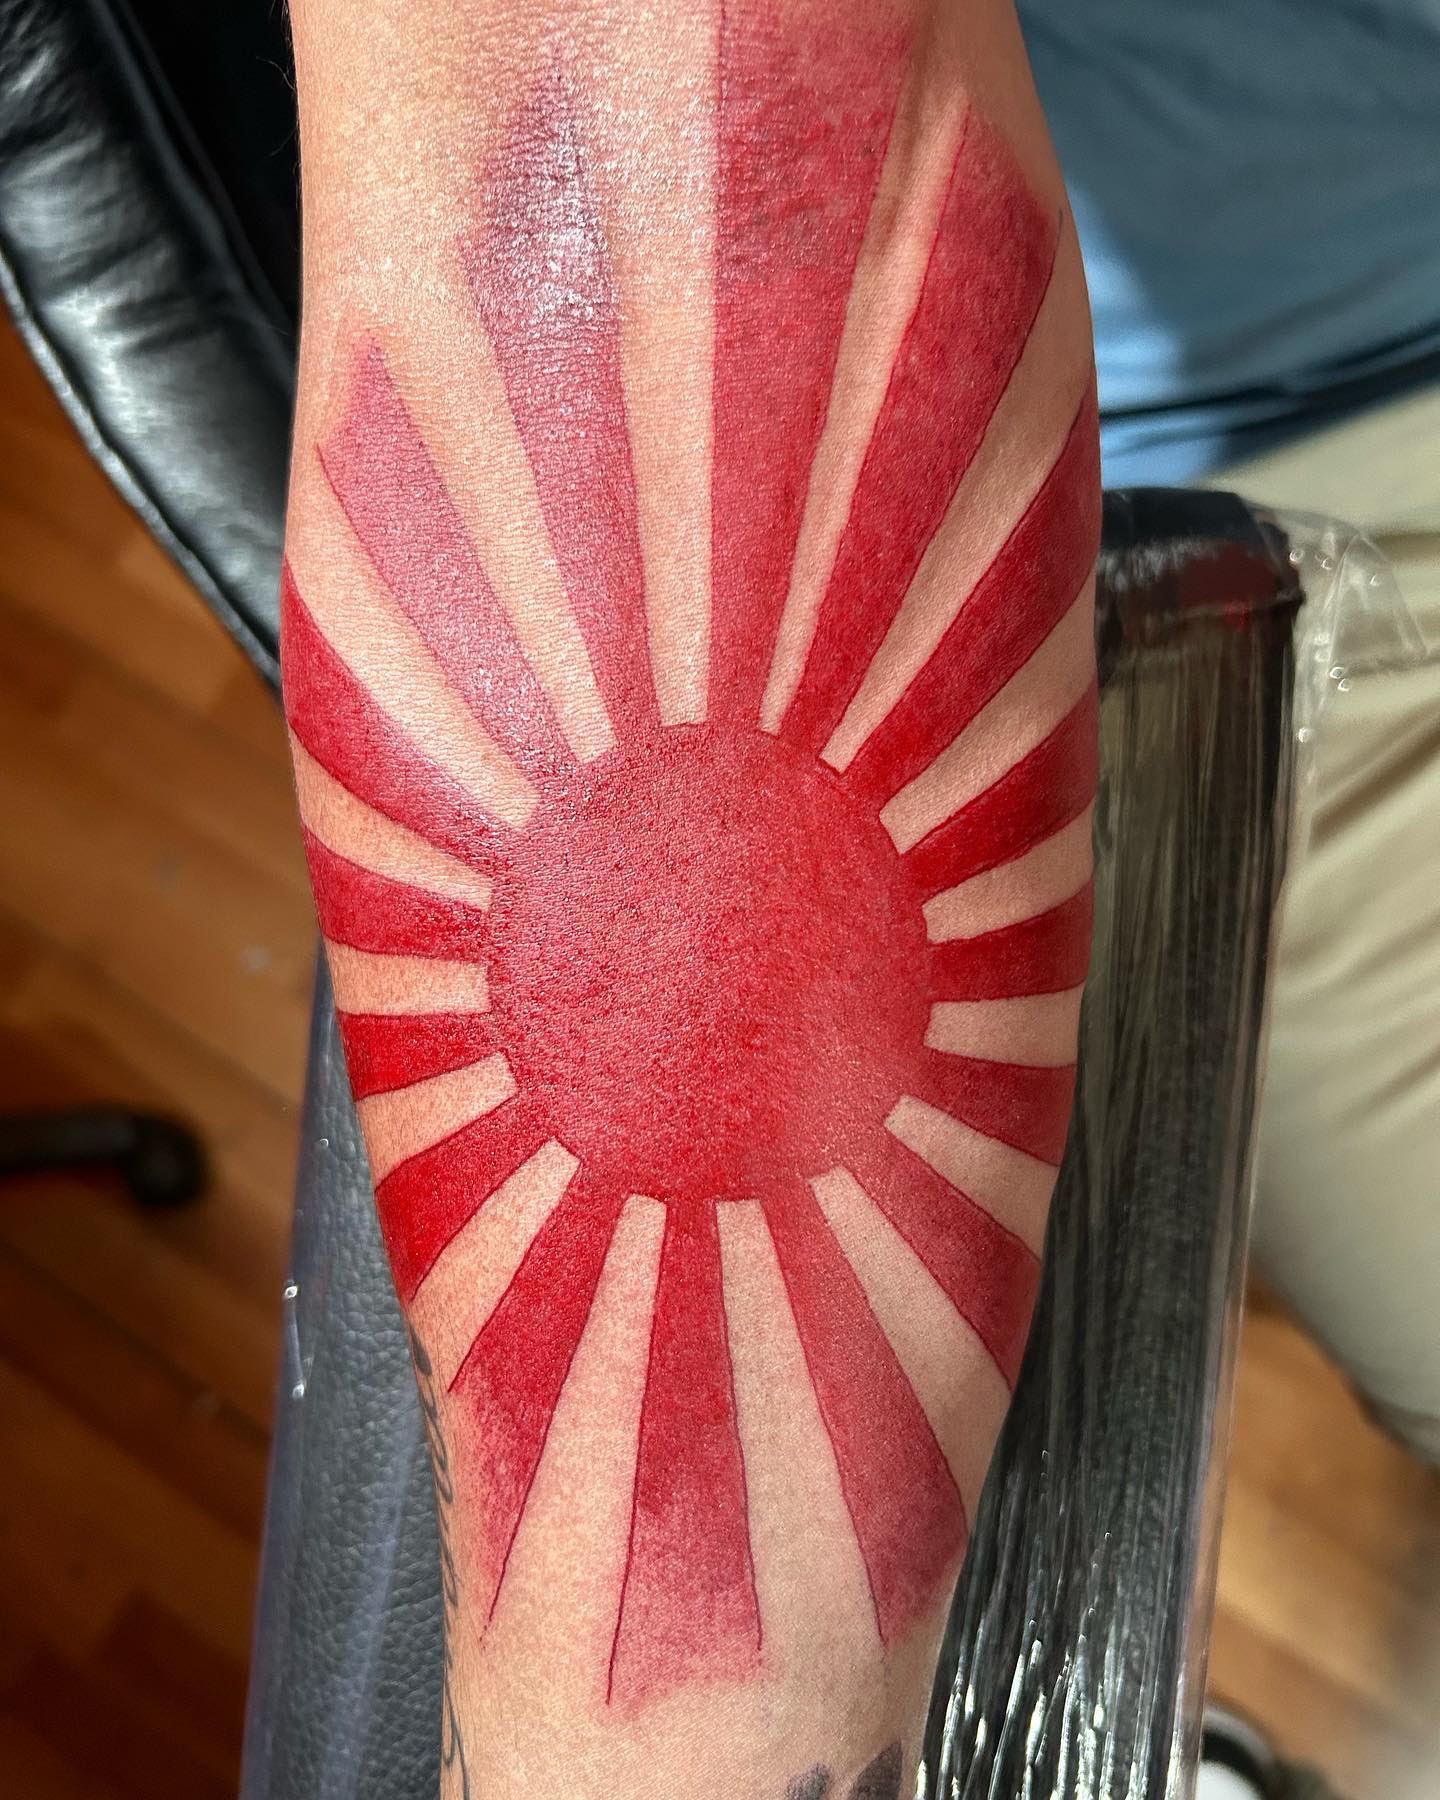 Red Sun Rays Tattoo on Arm